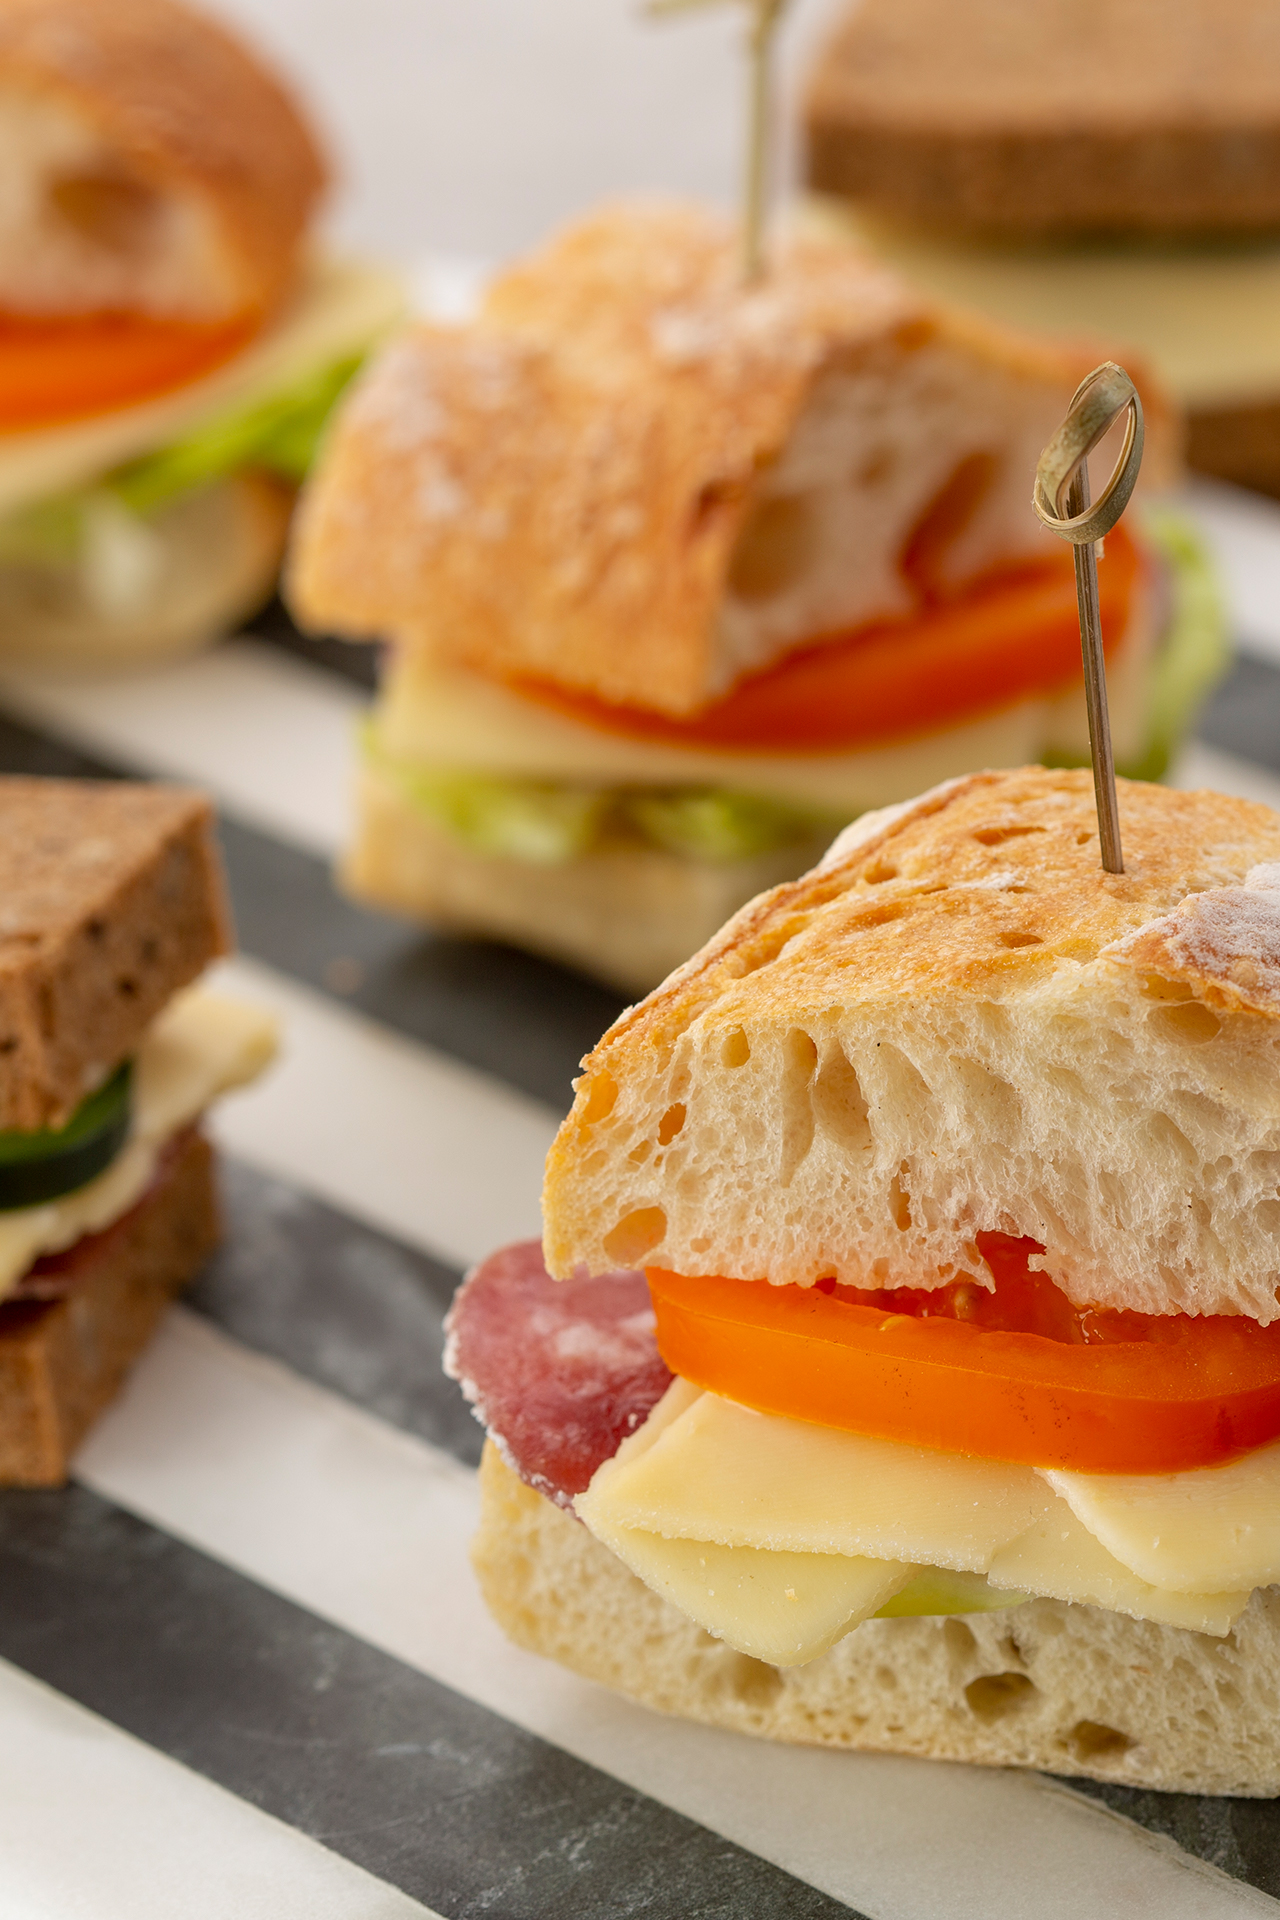 Mini sandwiches with Brie slices Ile de France Cheese